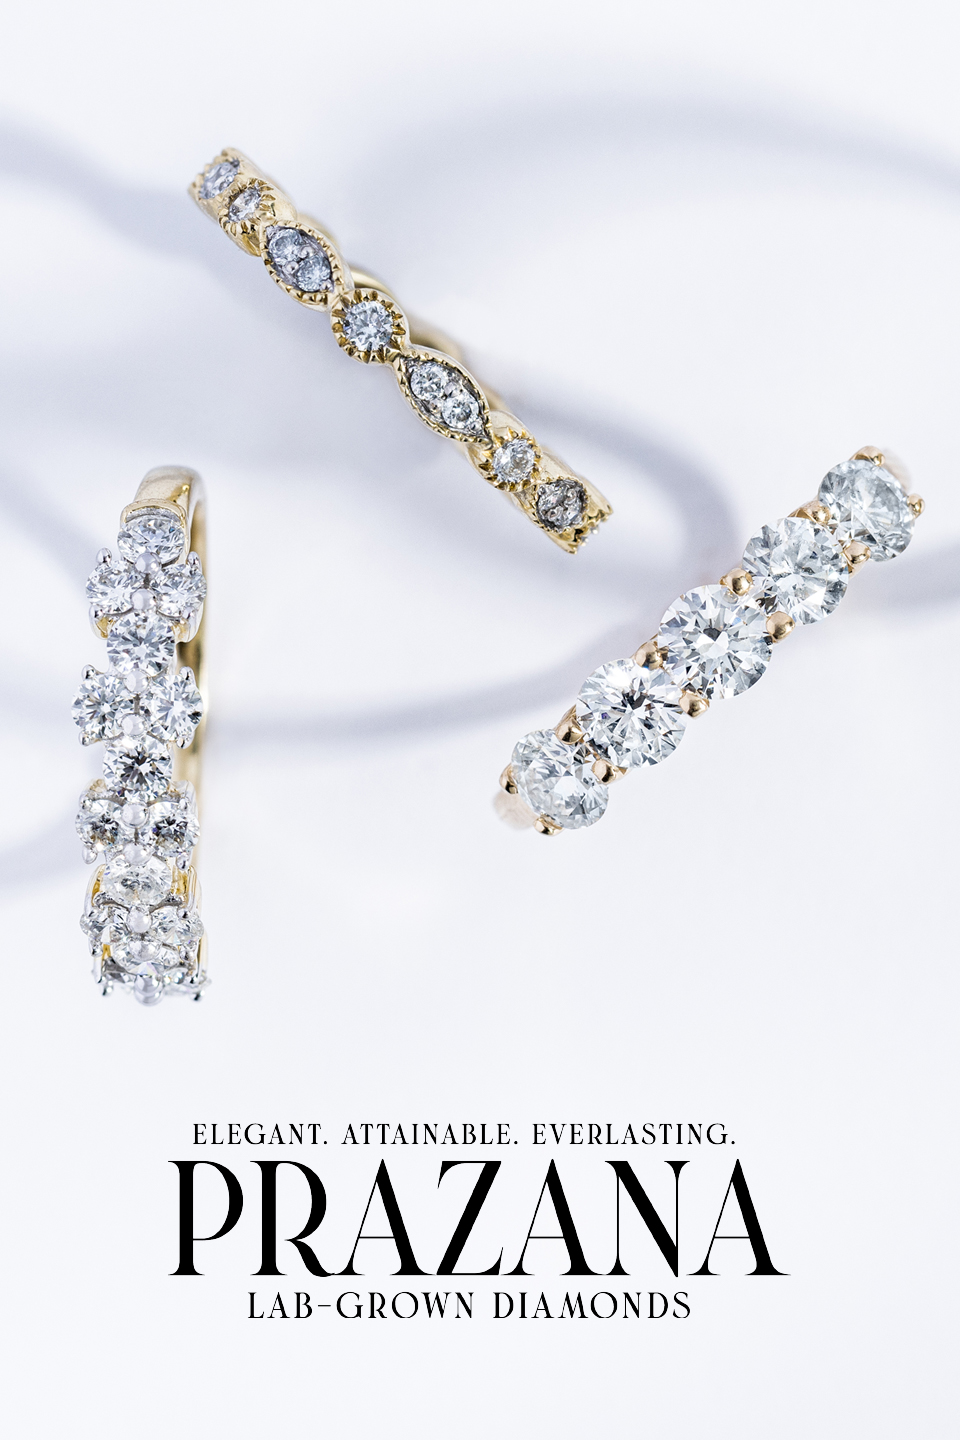 Series Banner for Prazana Lab-Grown Diamonds